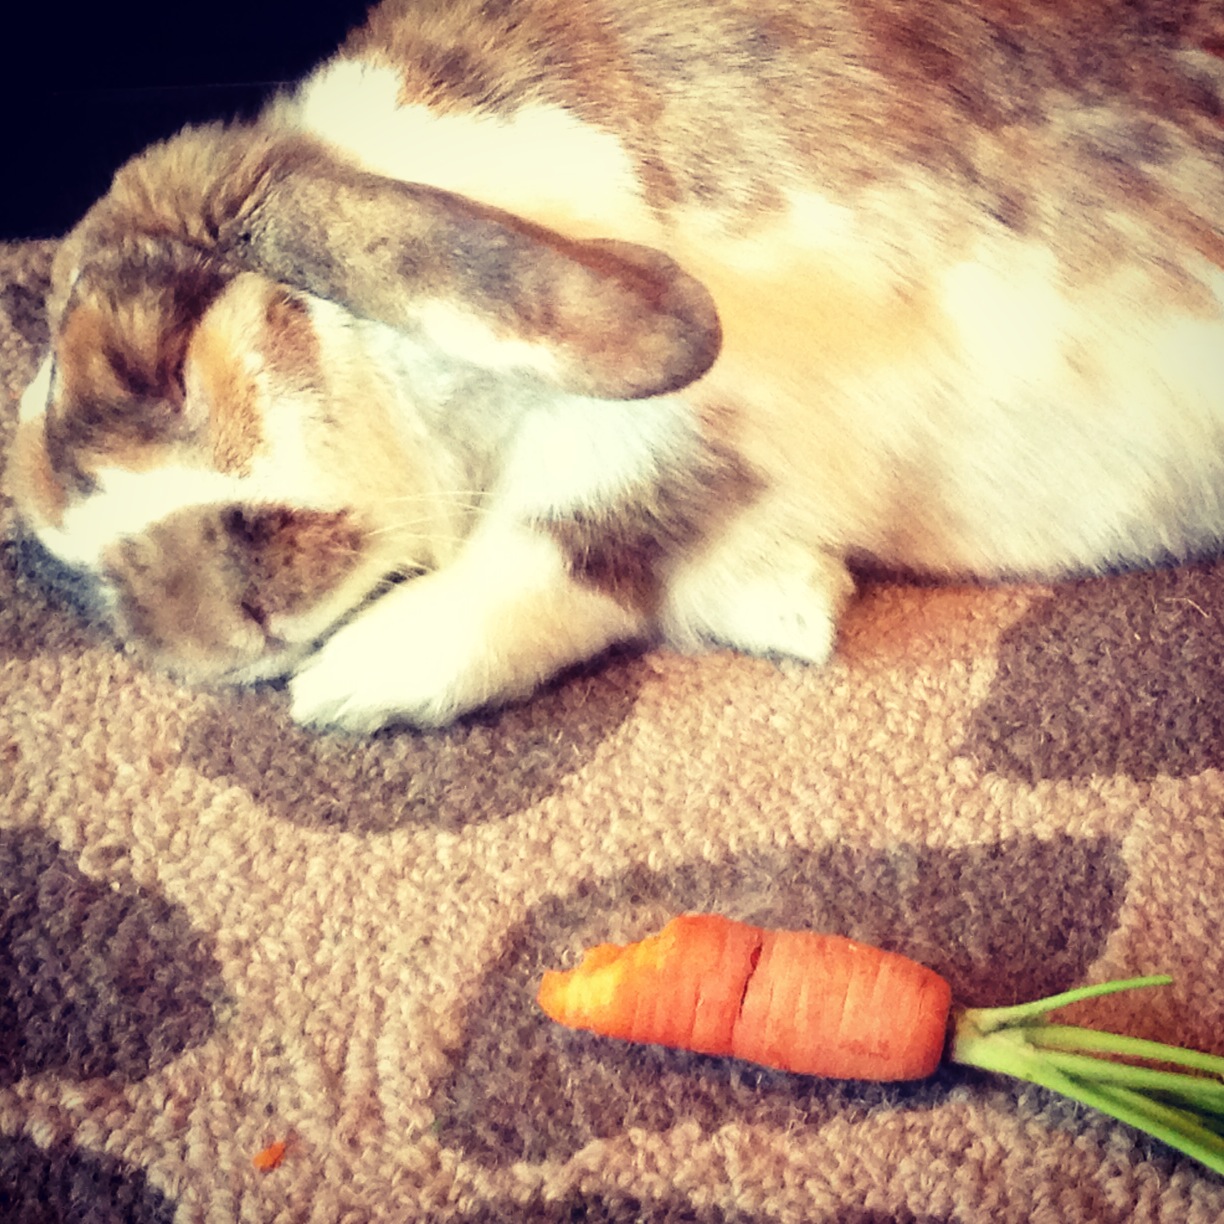 Sleeping Bunny Dreams of Carrots